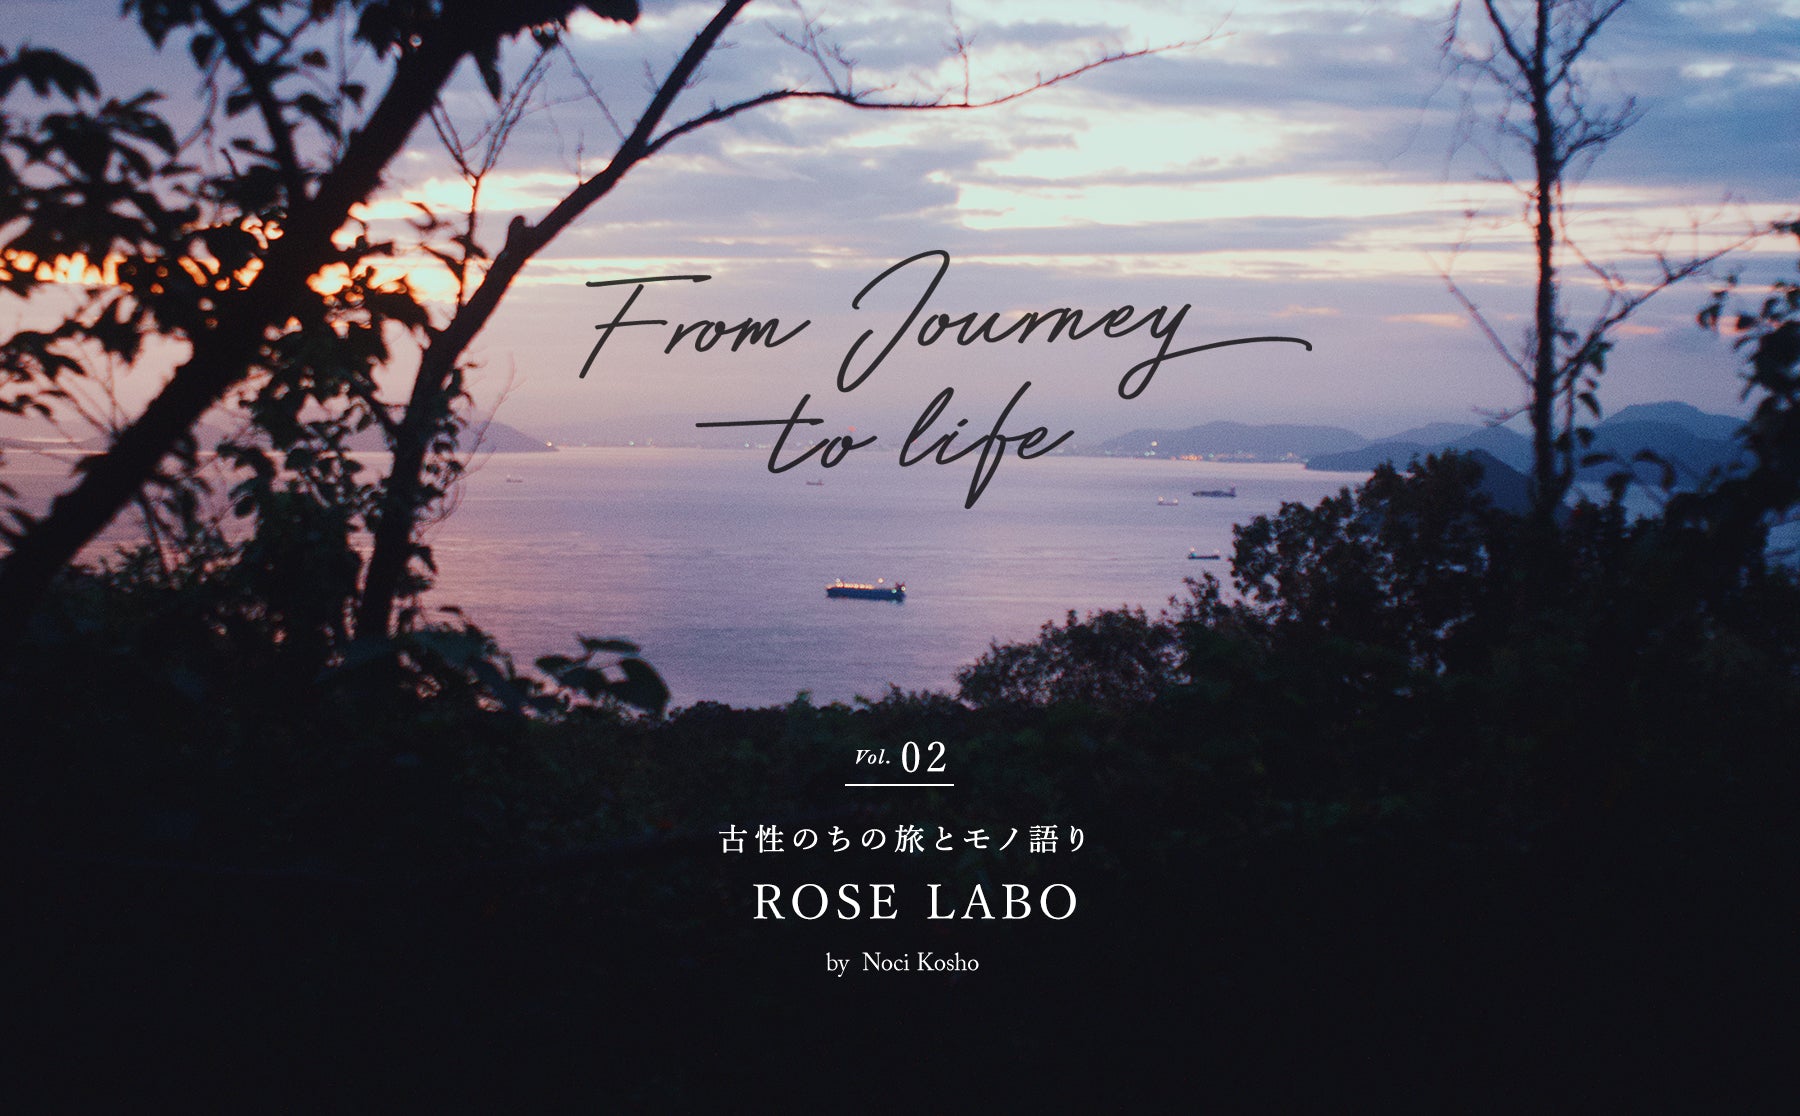 From Journey to life ー 古性のちの旅とモノ語りVol.2「ROSE LABO」ーのサムネイル